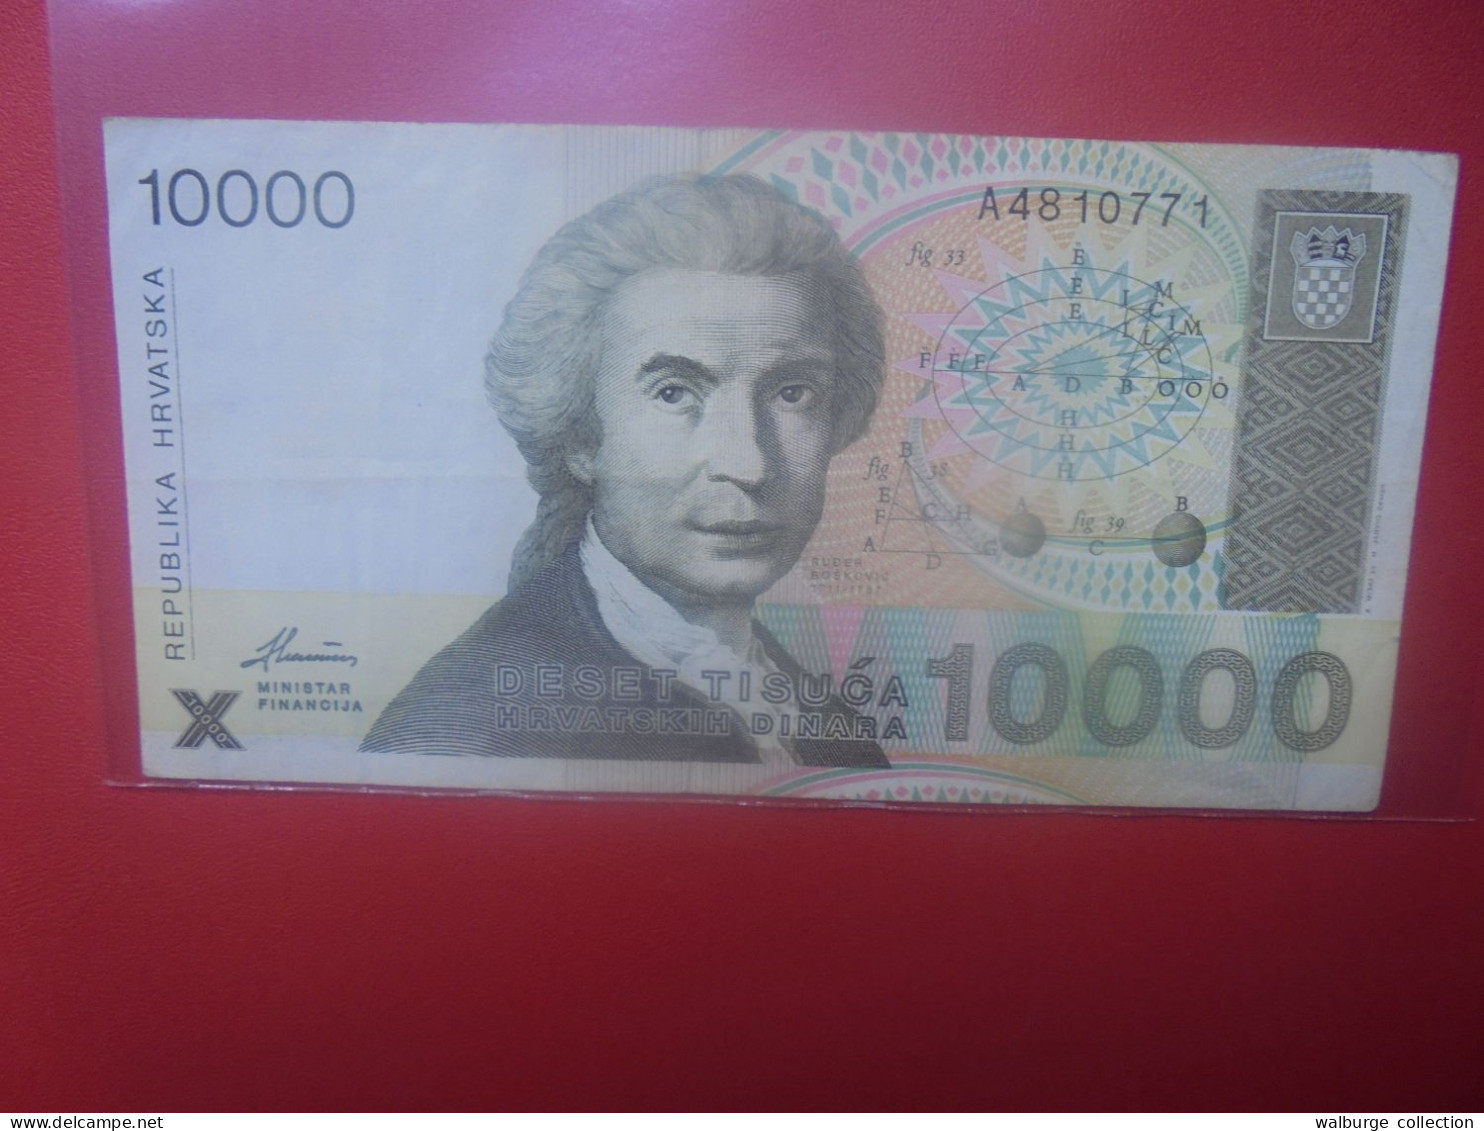 CROATIE 10.000 DINARA 1992 Circuler (B.33) - Kroatië